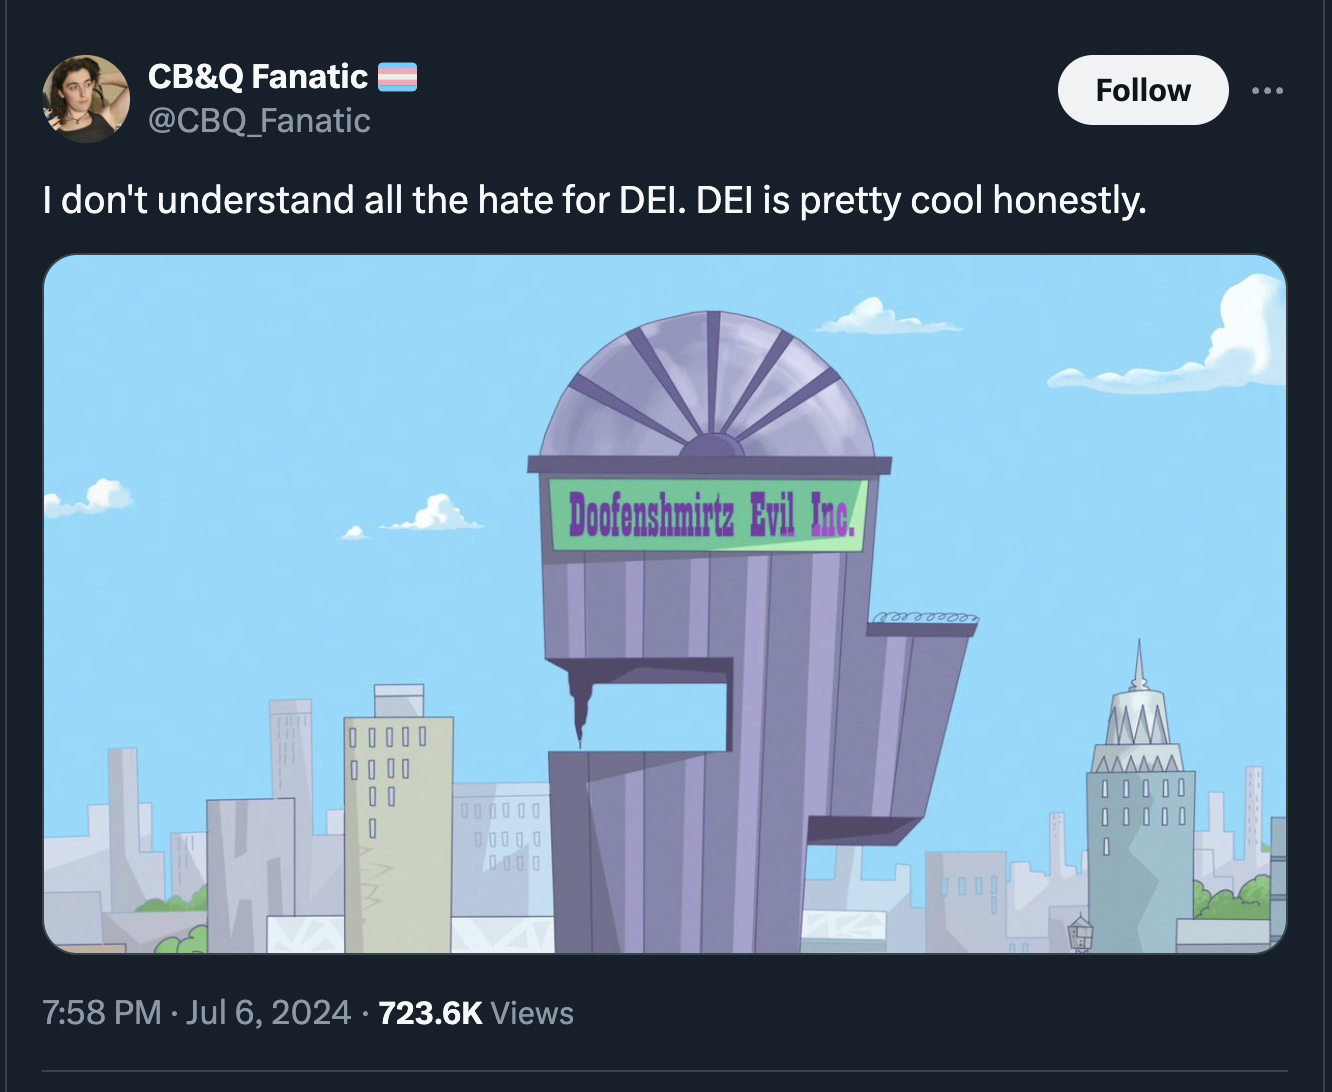 doofenshmirtz evil inc meme - Cb&Q Fanatic I don't understand all the hate for Dei. Dei is pretty cool honestly. 0000 1000 Views Doofenshmirtz Evil Inc. Aaaaaa 00000